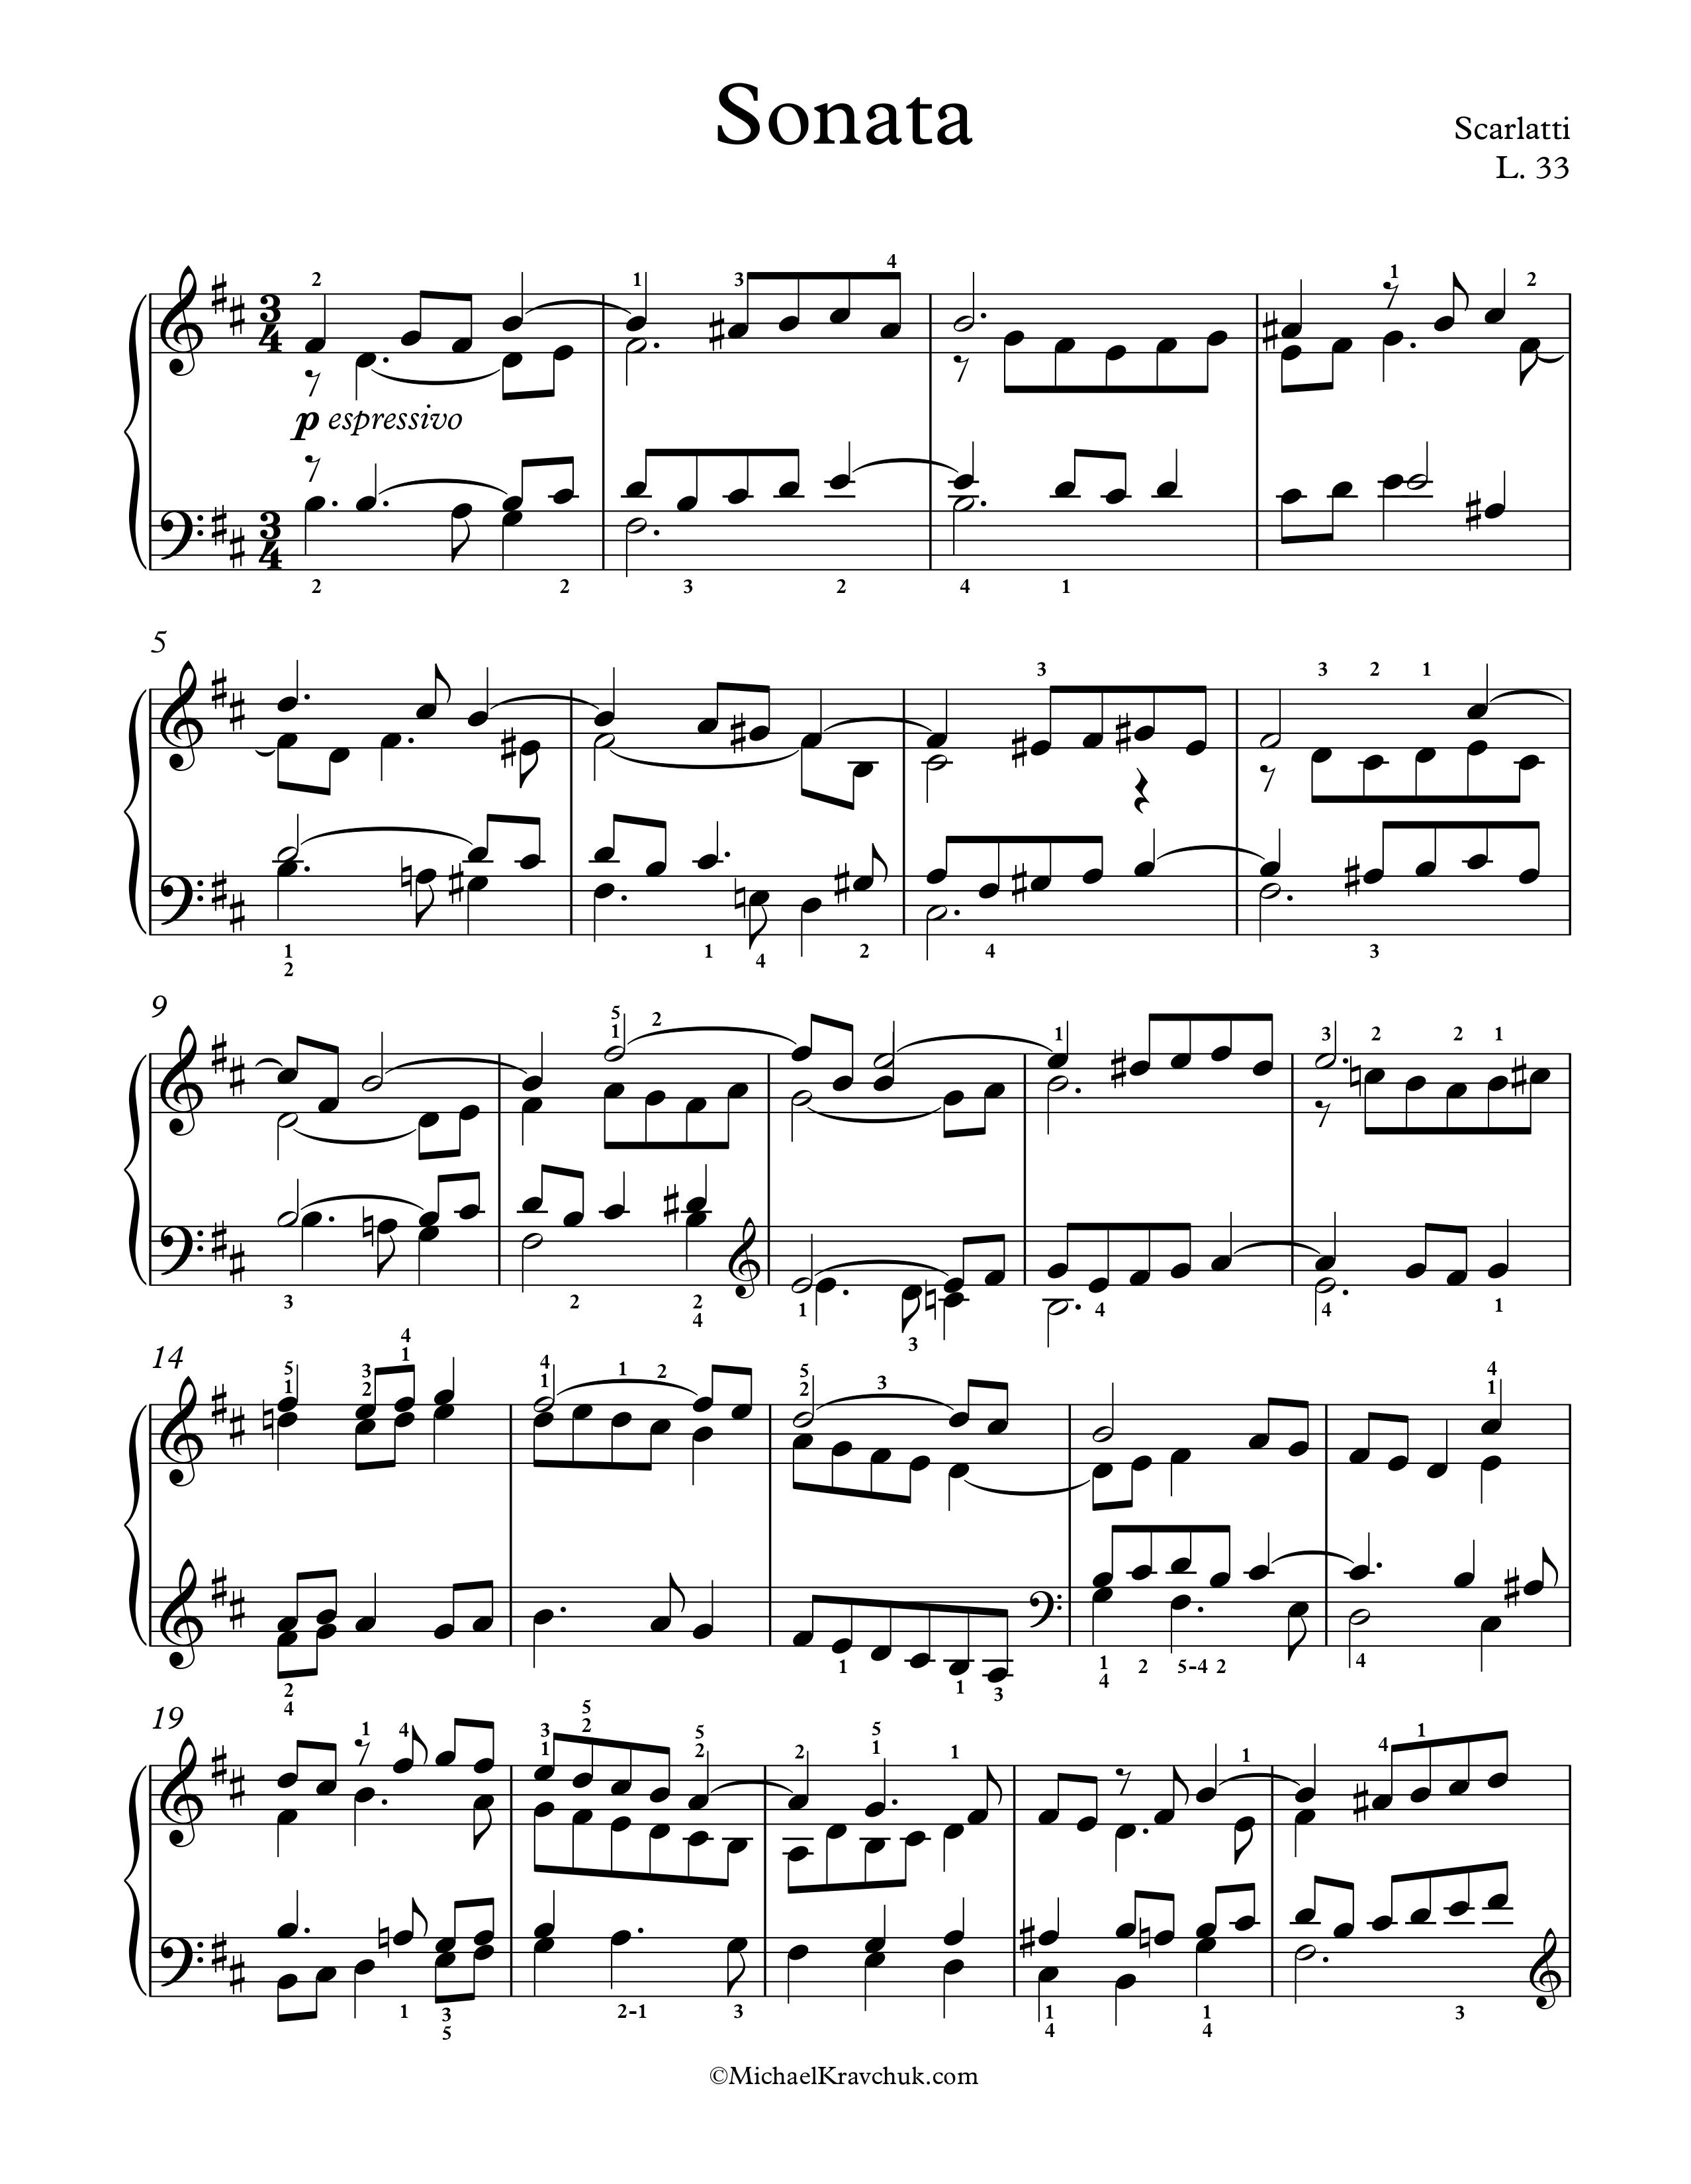 Free Piano Sheet Music - Sonata L. 33 - Scarlatti